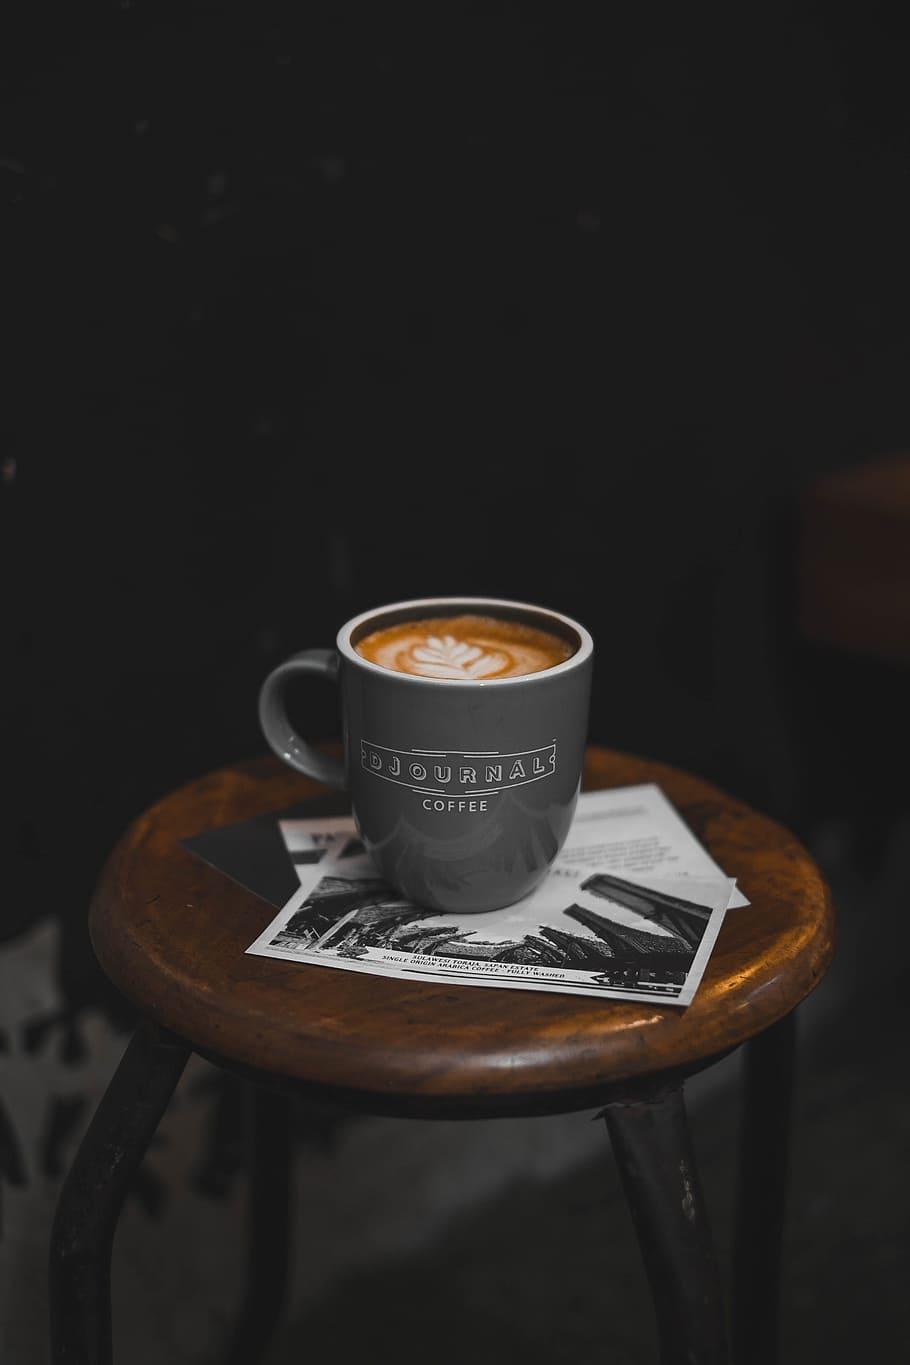 HD wallpaper: black coffee mug filed with espresso coffee, stool